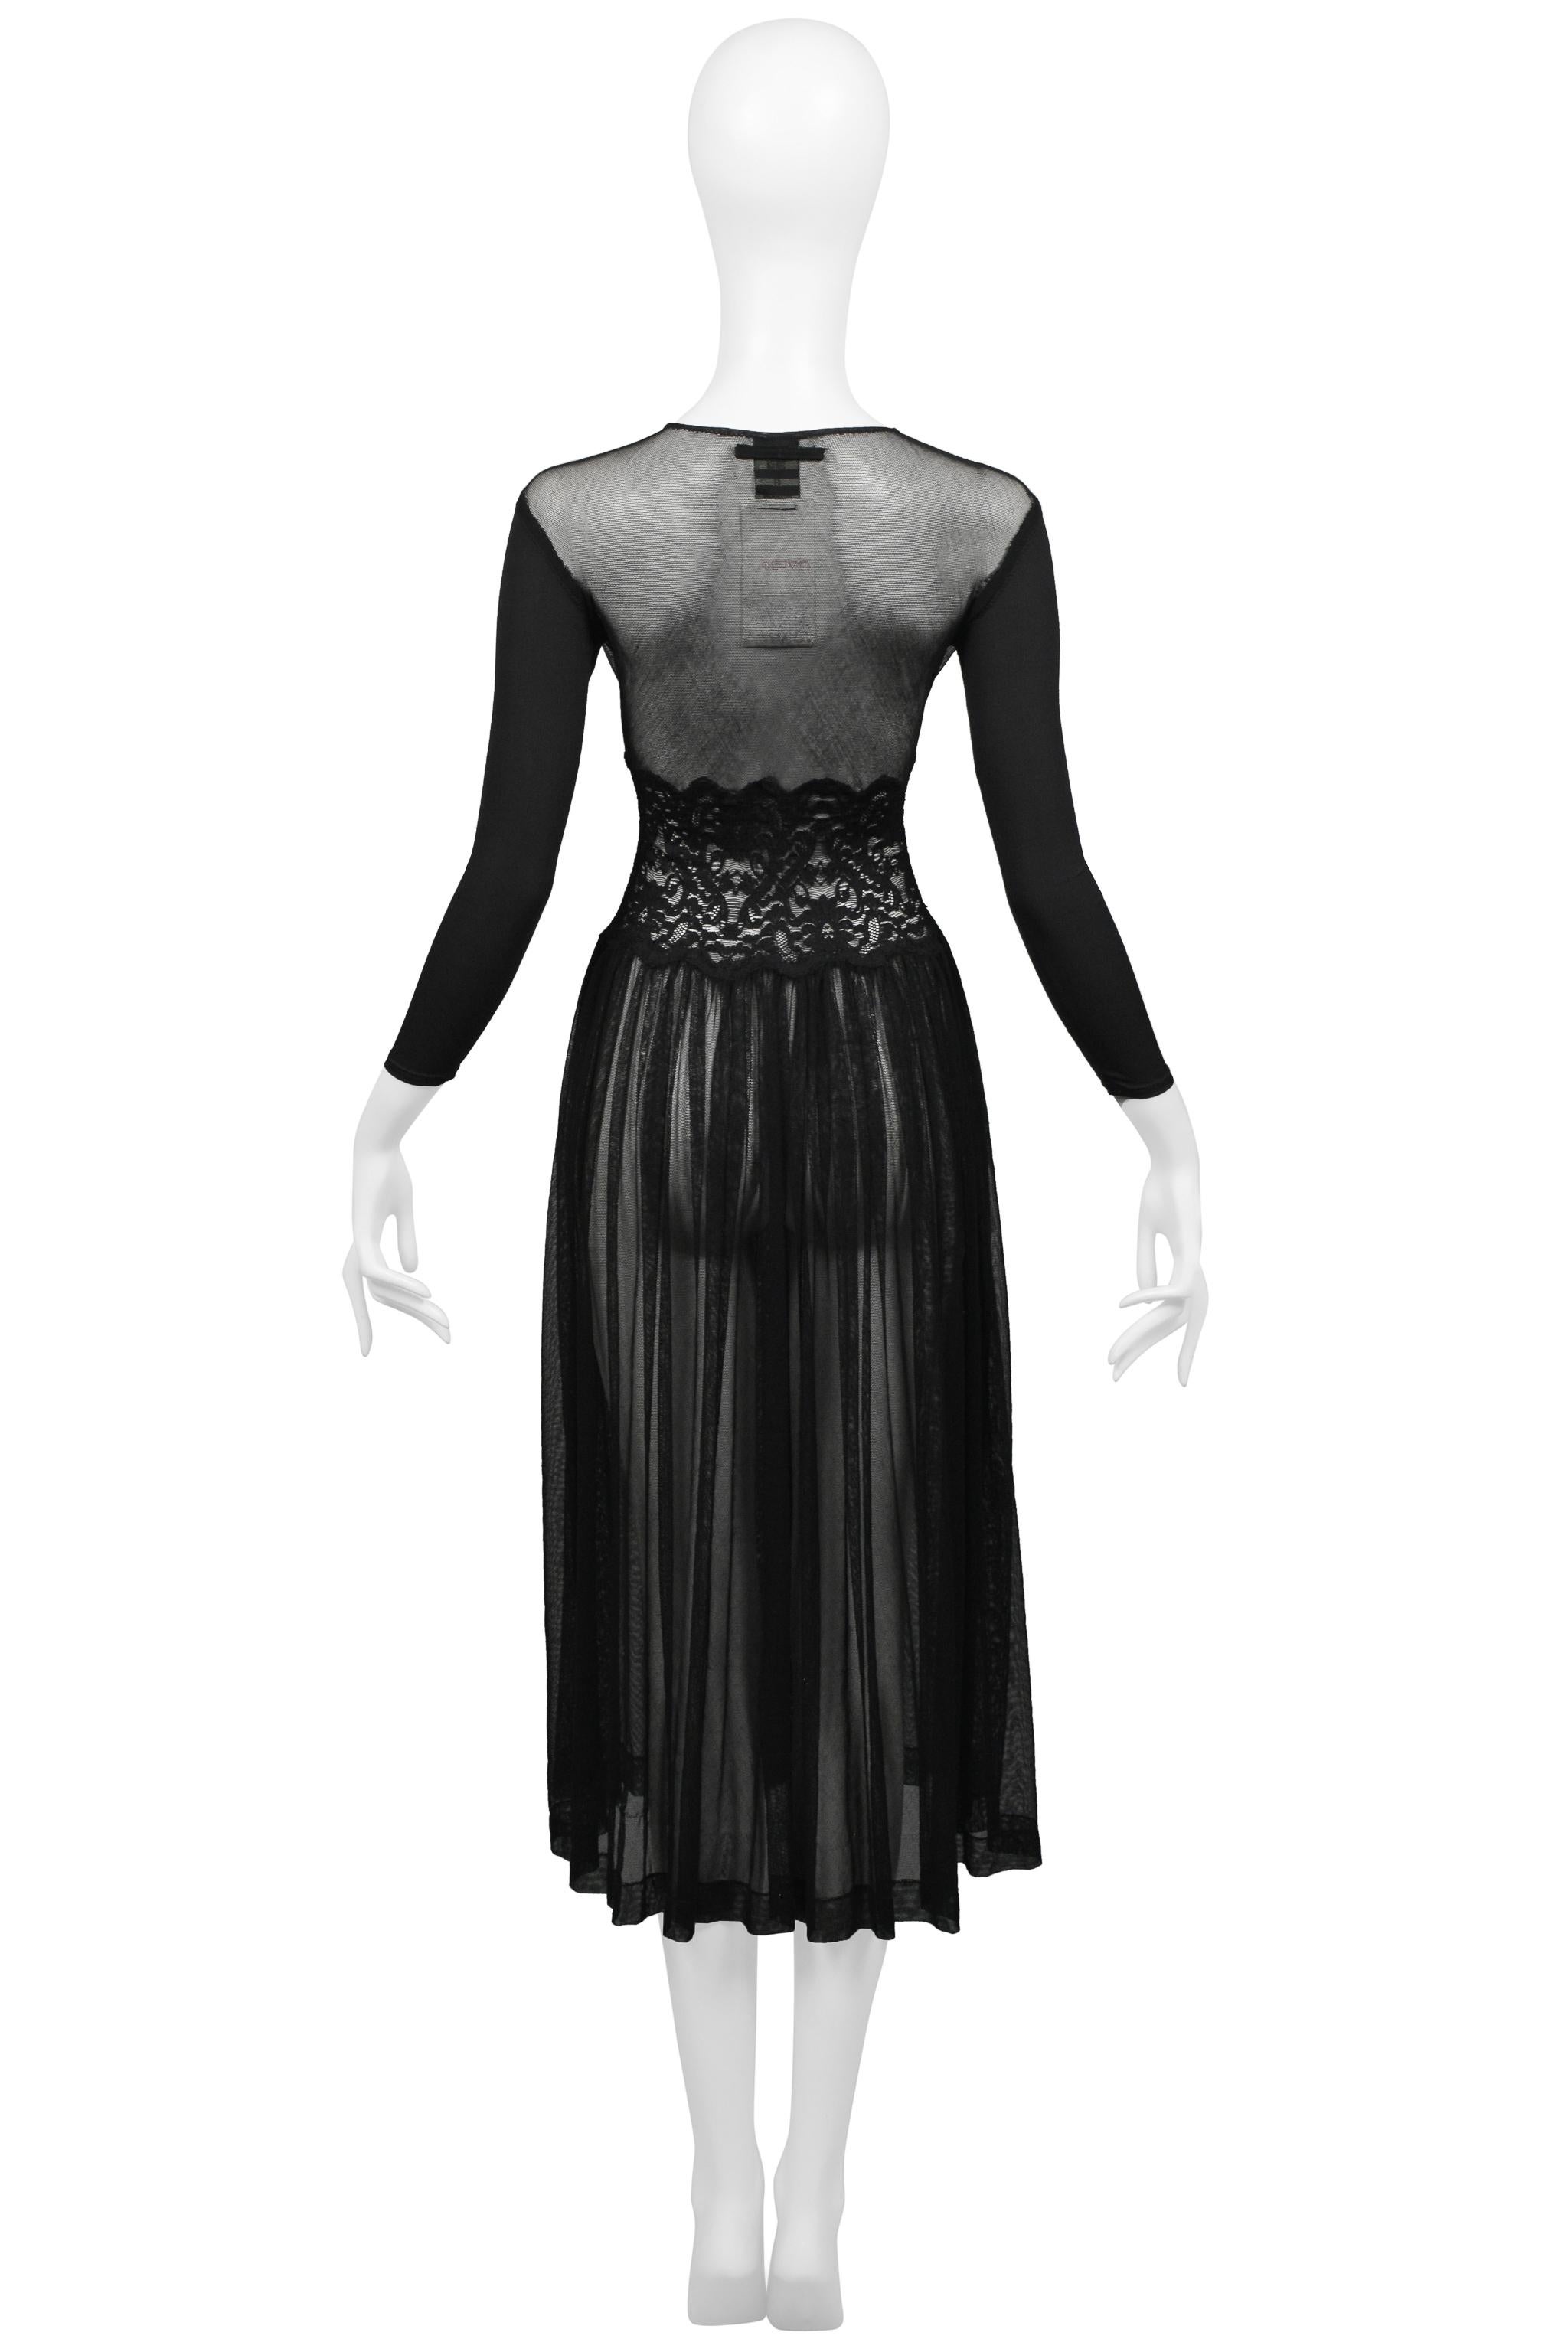 Women's Jean Paul Gaultier Black Mesh, Lace And Tulle Ballet Dress 1988 For Sale